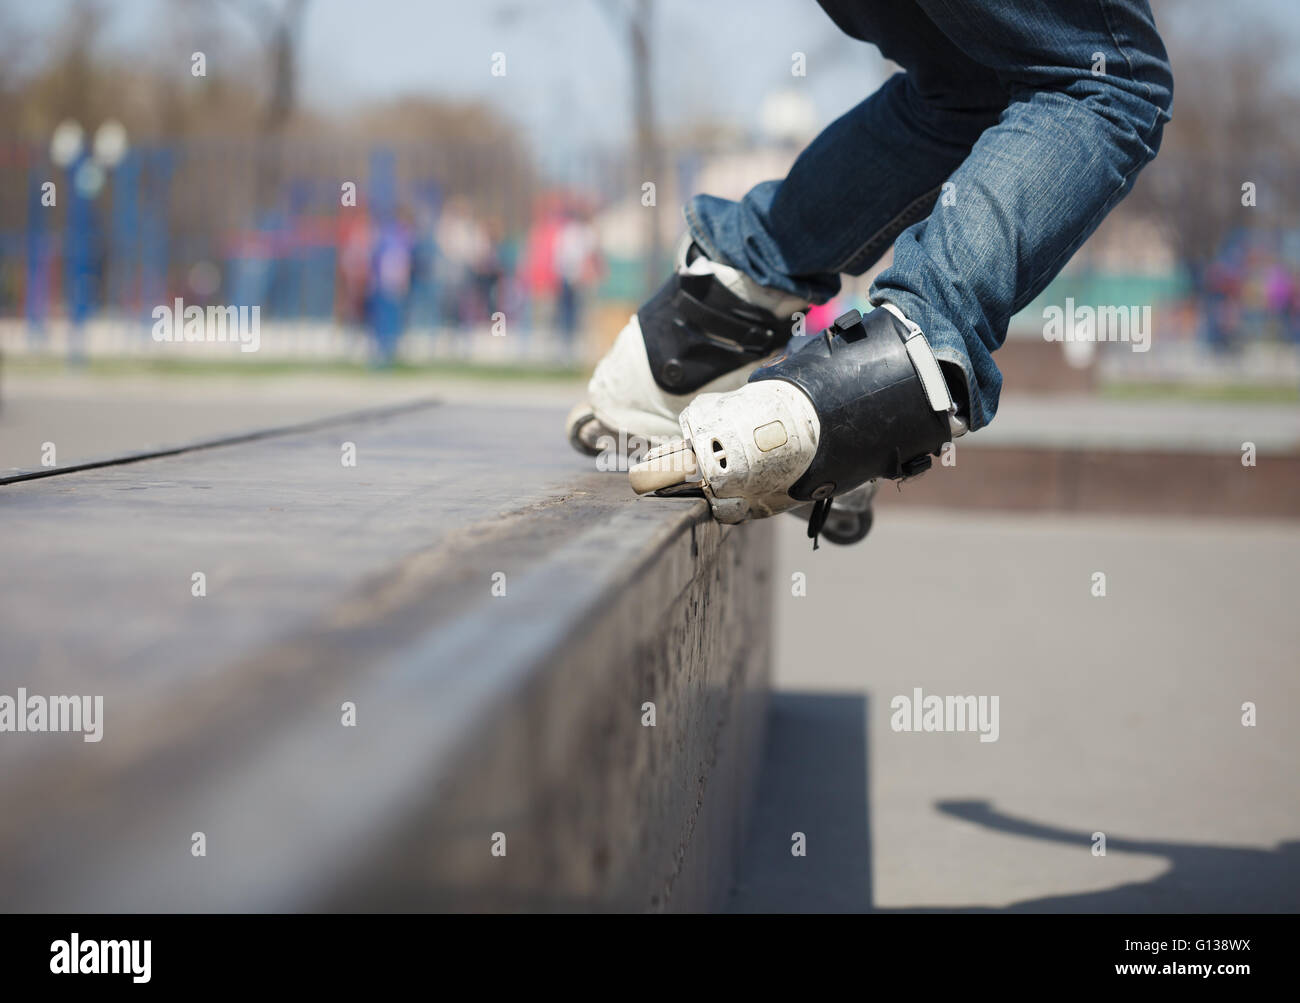 Rollerblader grinding on rail in skate park outdoors. Trick is